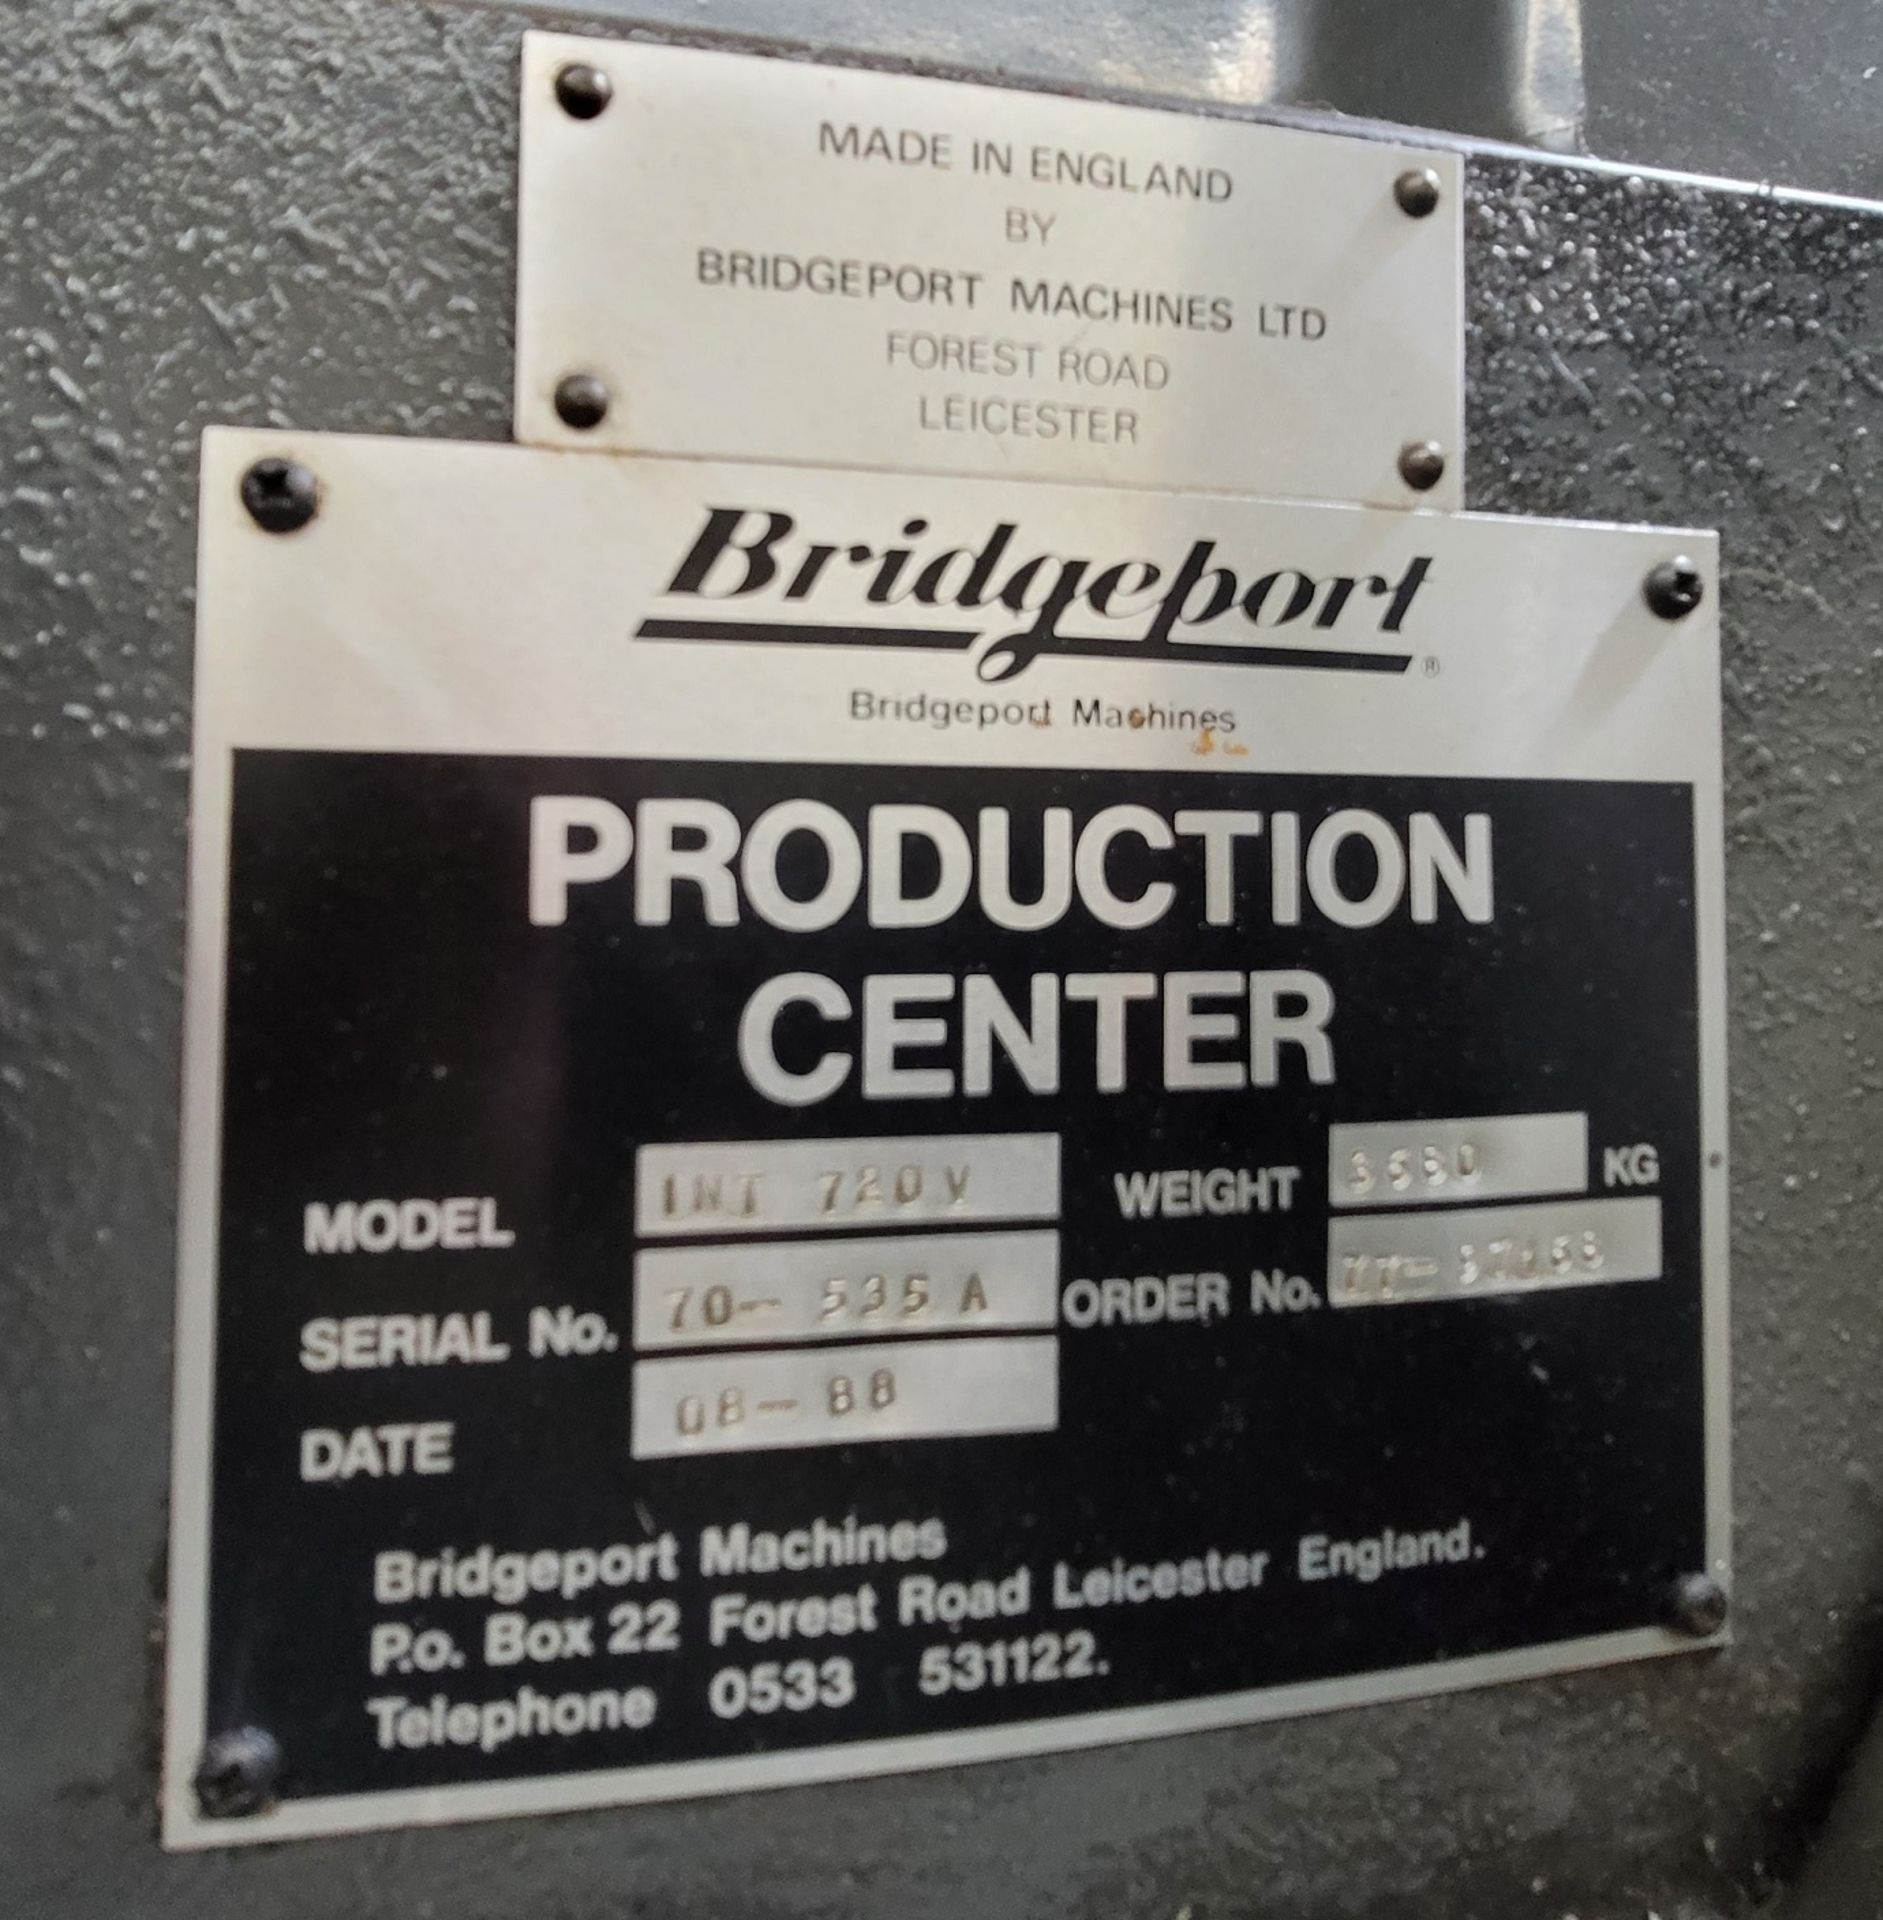 1988 BRIDGEPORT PRODUCTION CENTER, MODEL INTERACT 720V, S/N 70-535A, HEIDENHAIN CNC CONTROLS - Image 6 of 6